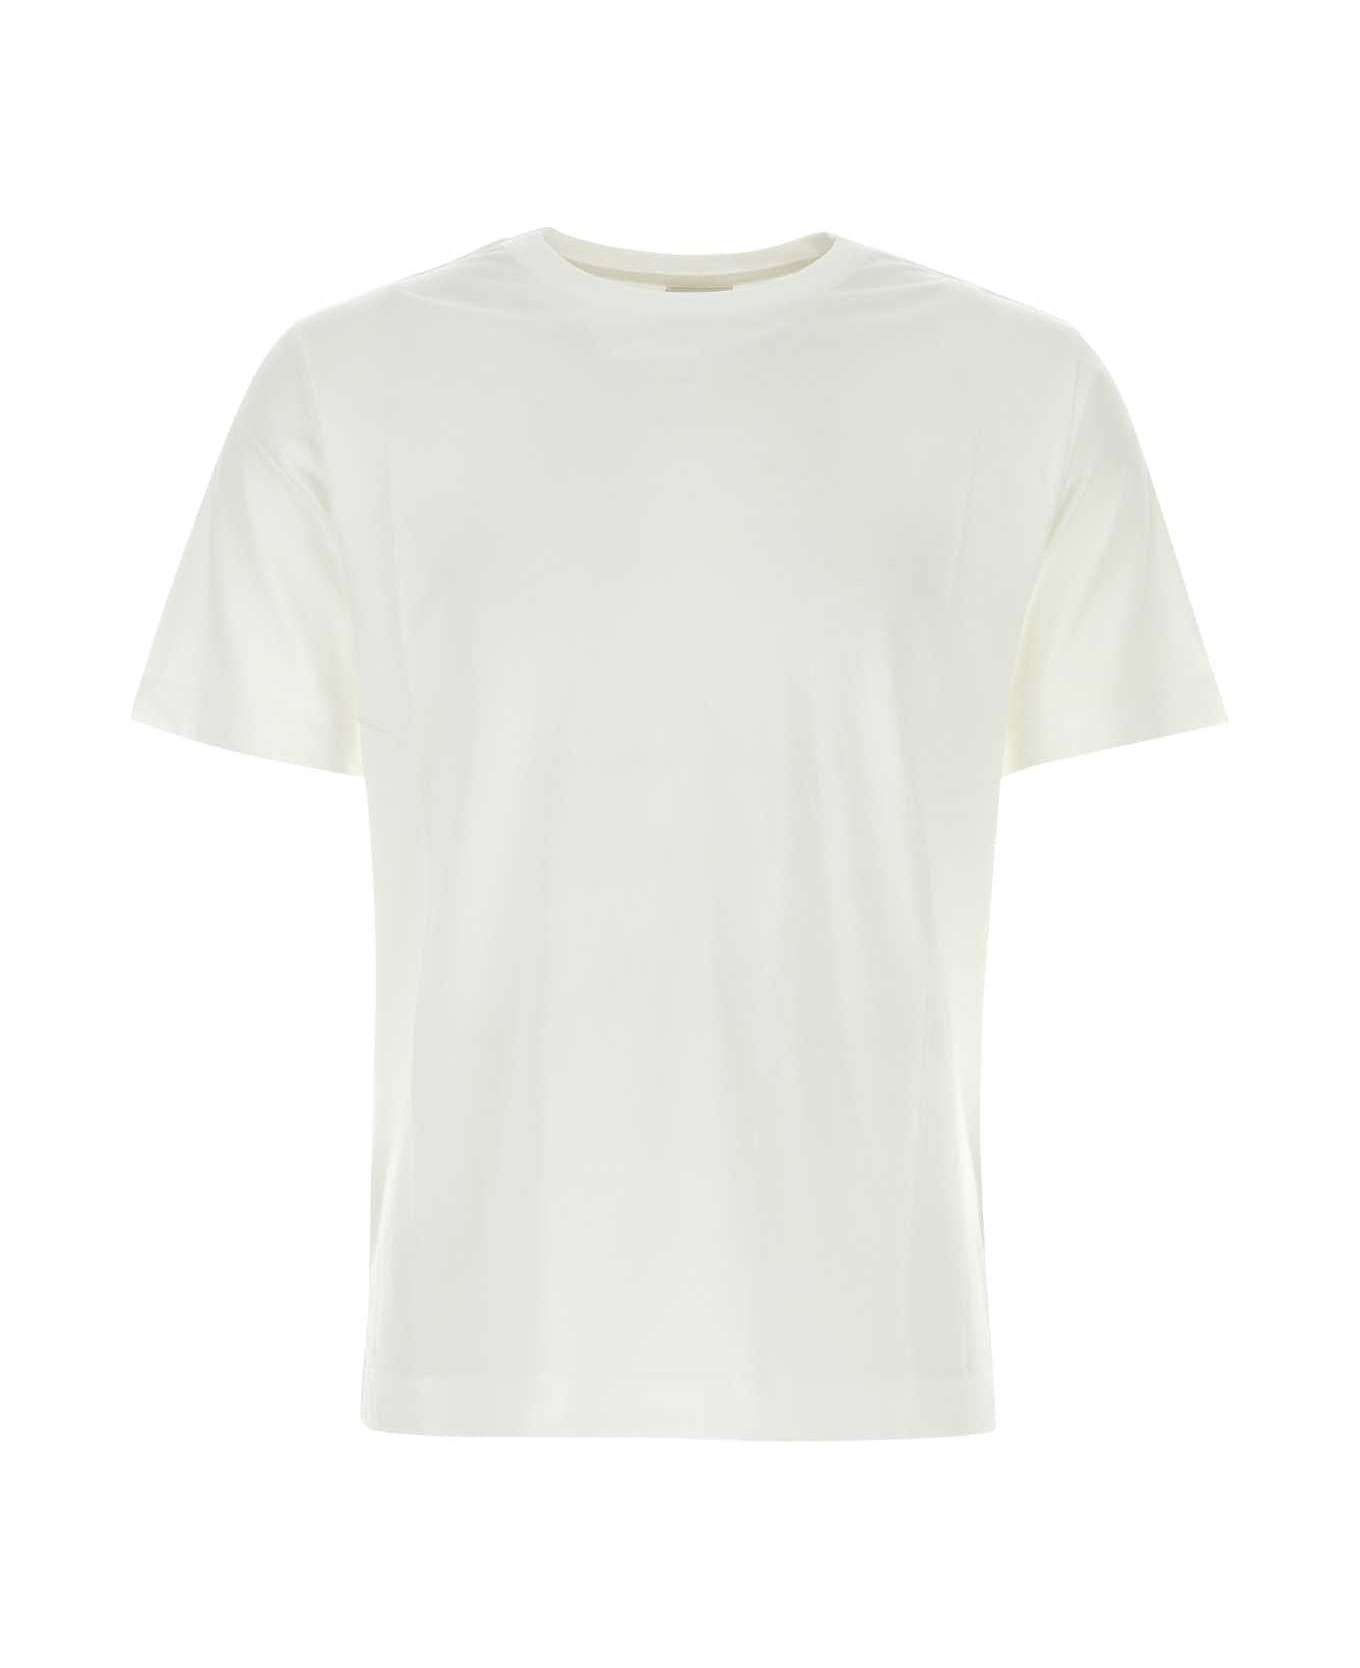 Dries Van Noten White Cotton T-shirt - White